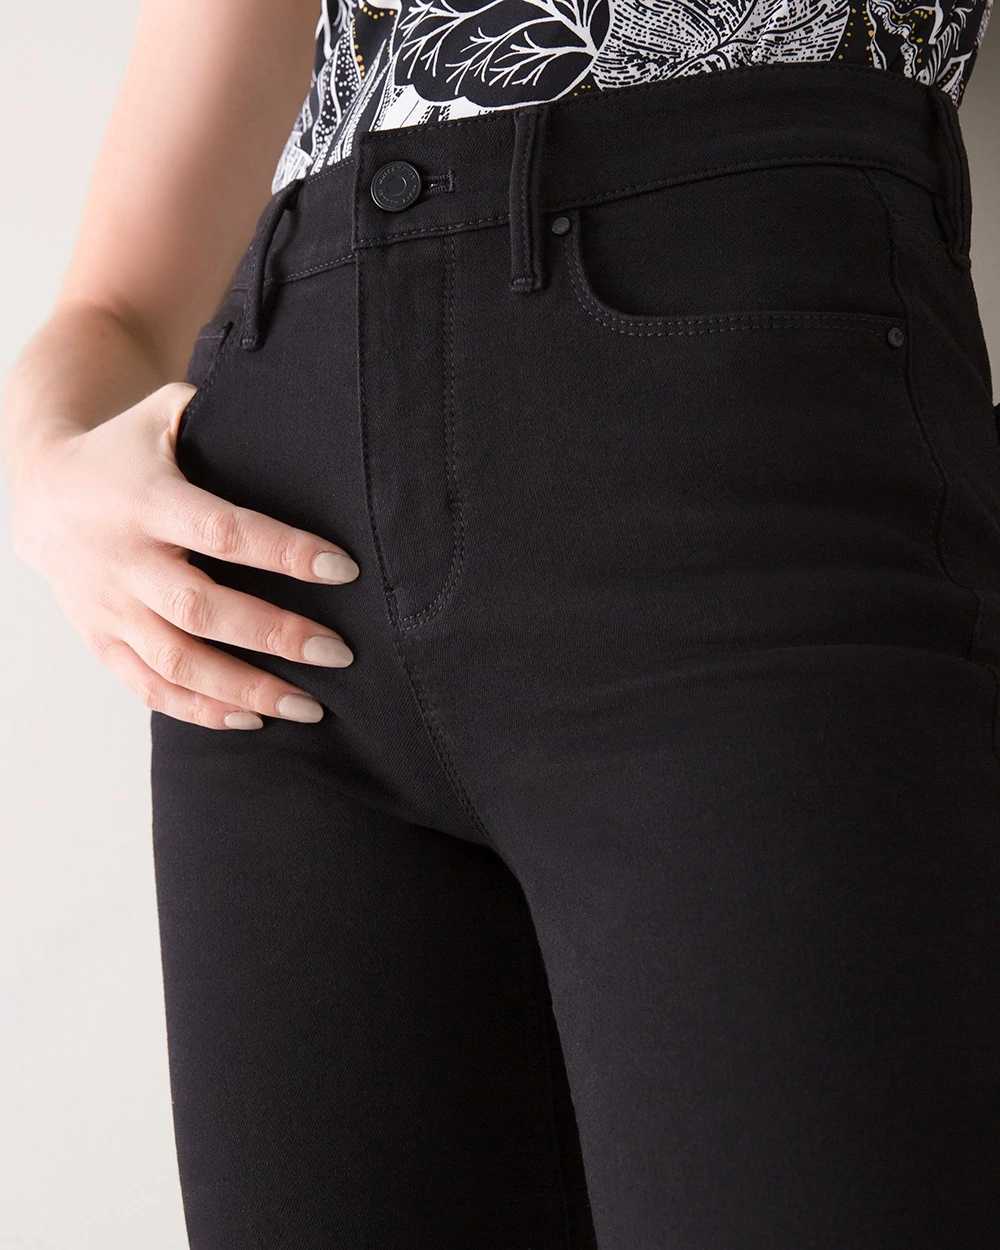 Petite High-Rise Sculpt Black Slim Jeans click to view larger image.